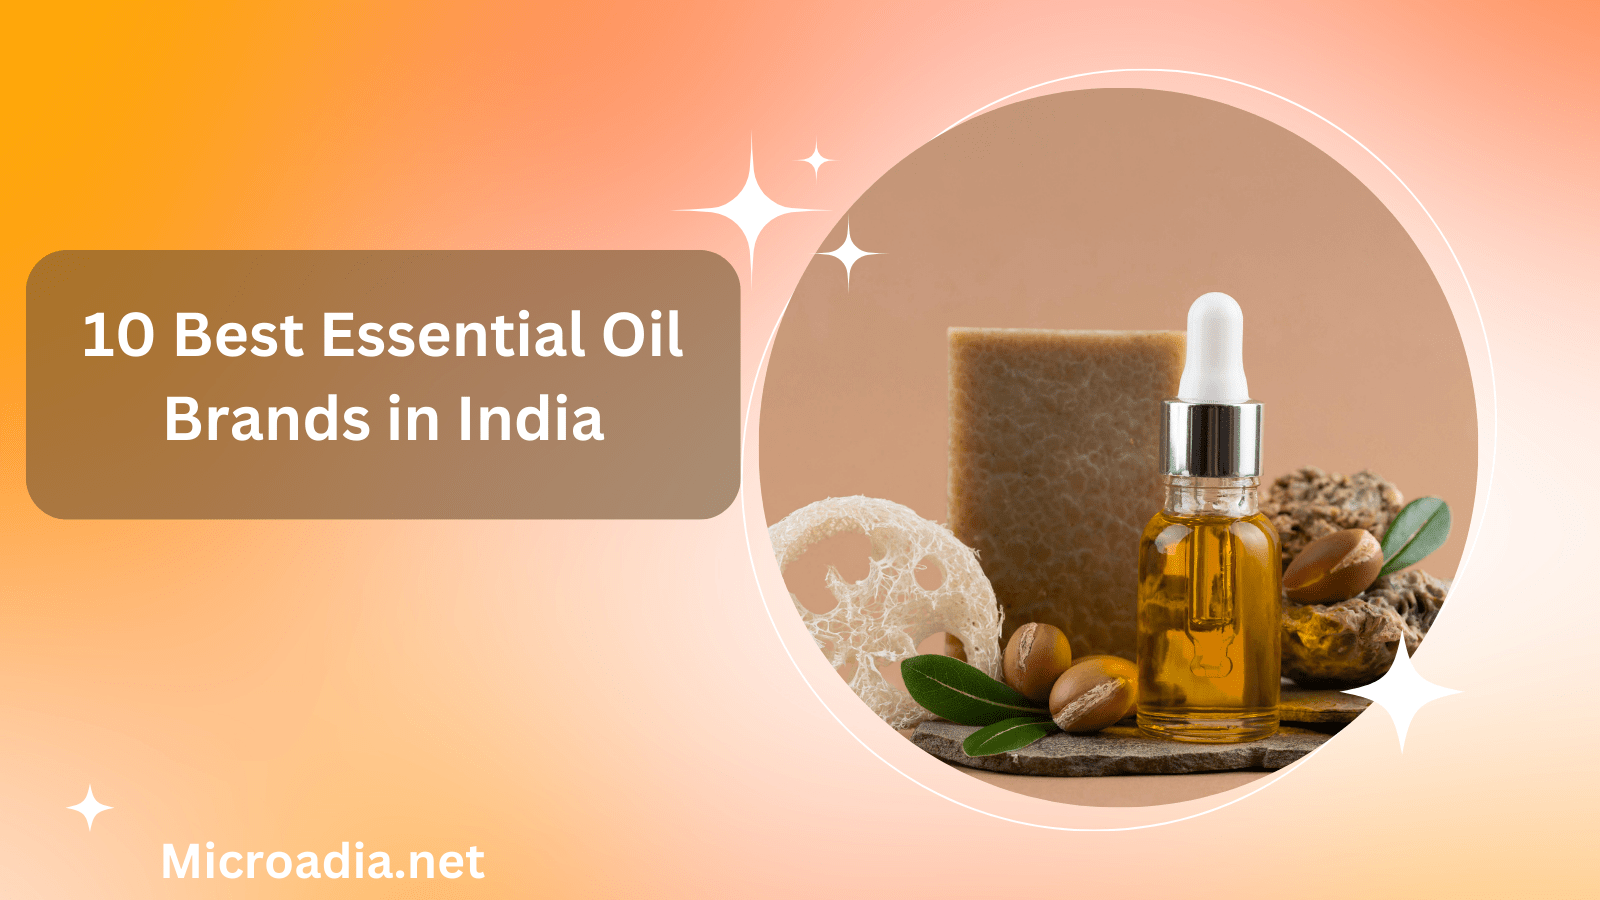  10 Best Essential Oil Brands in India